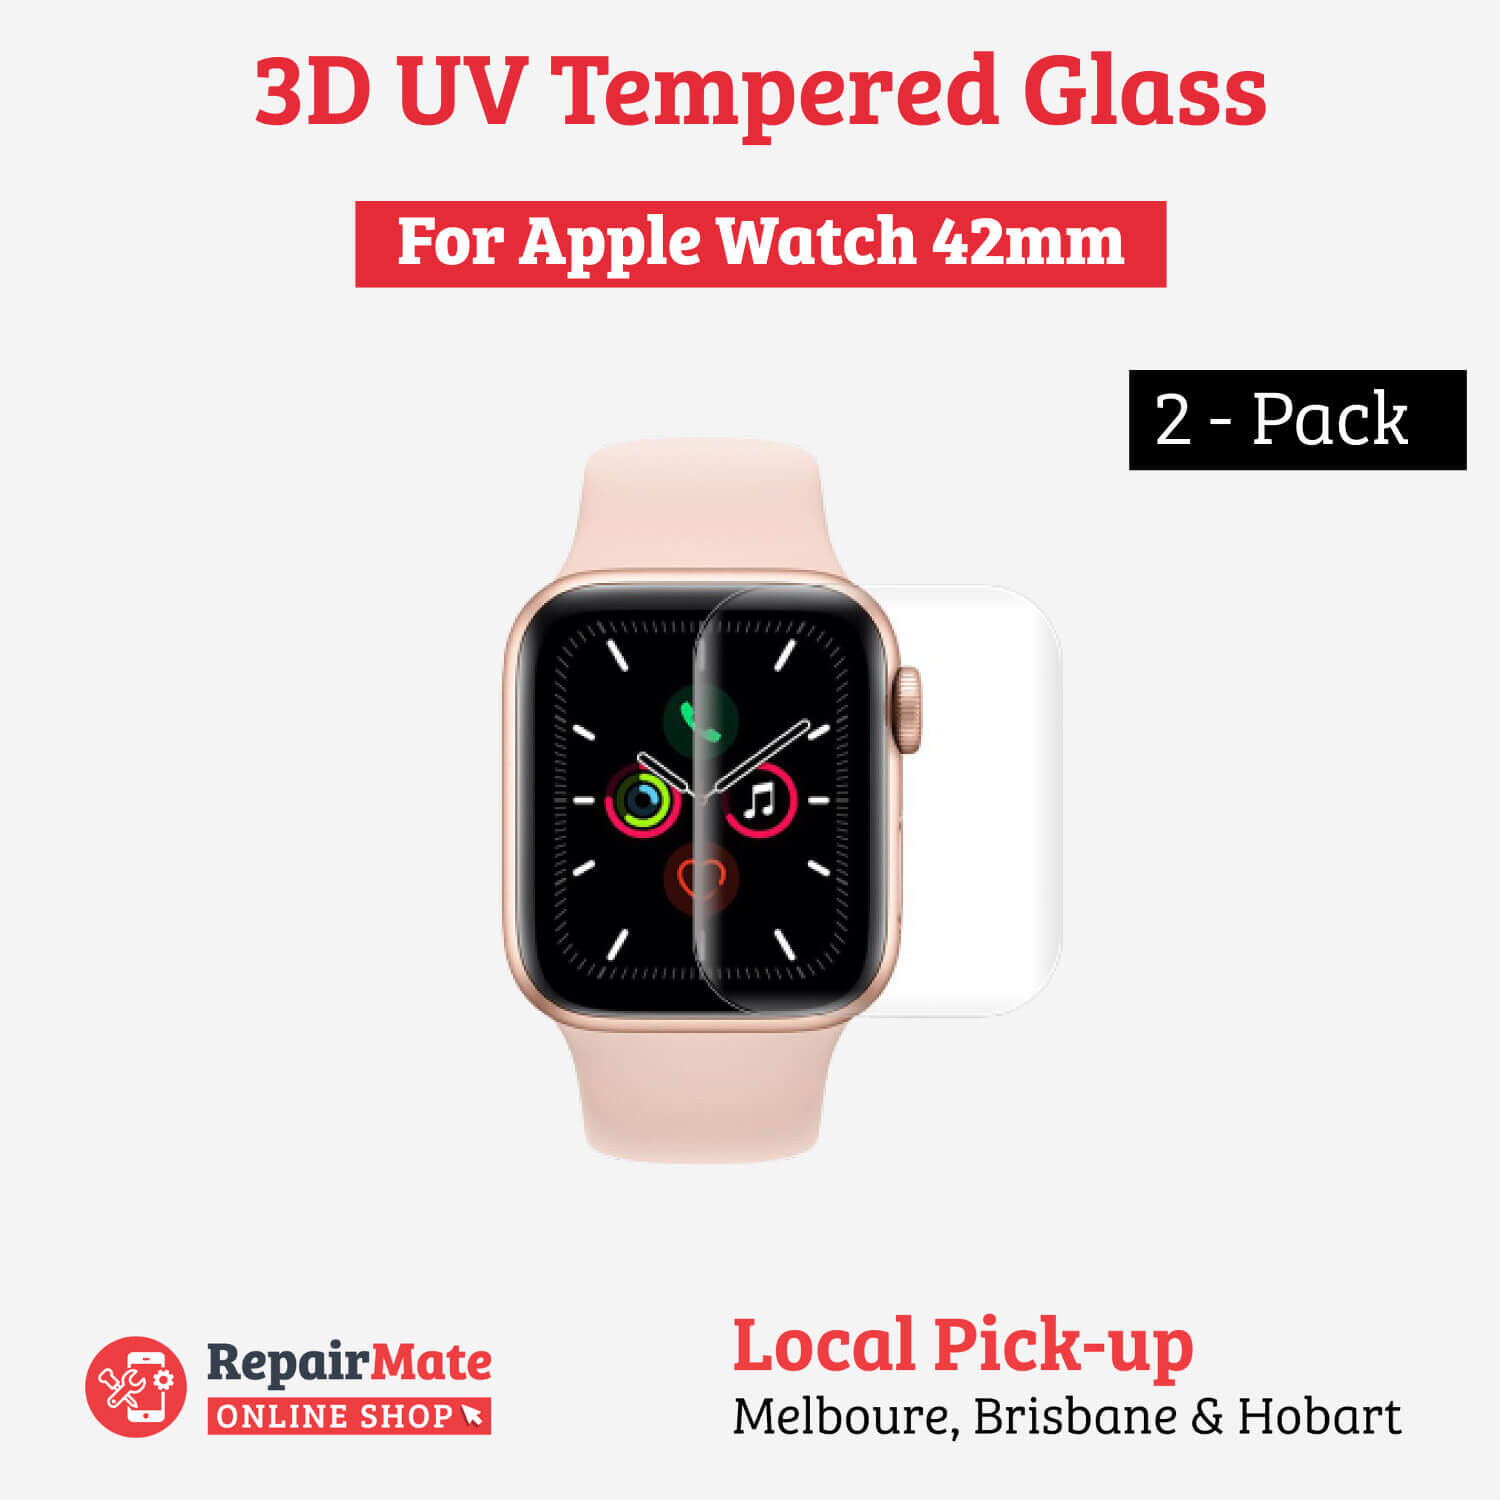 Apple Watch 42mm 3D UV Tempered Glass